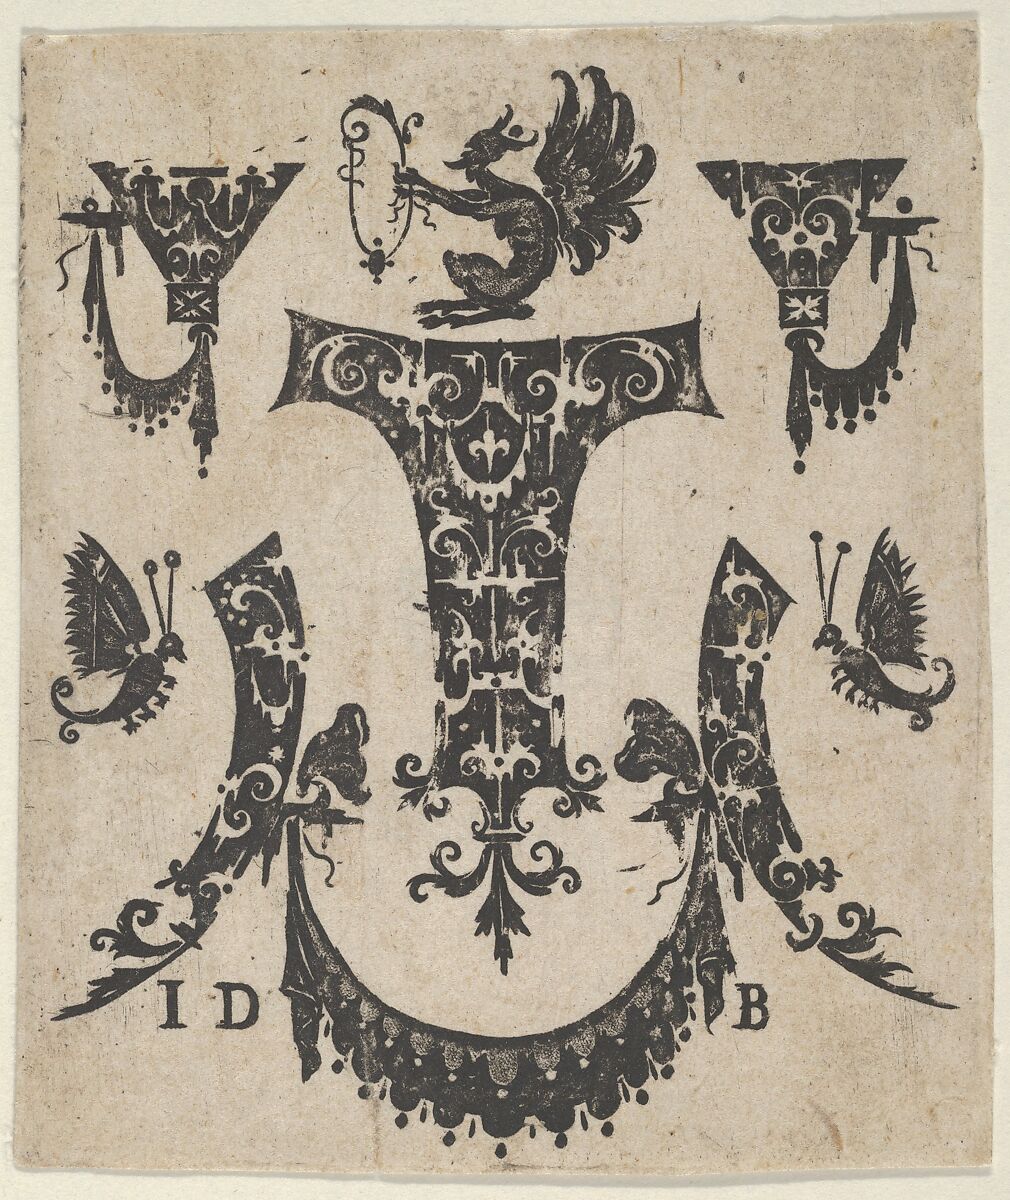 Blackwork Print with Five Ornament Motifs, a Pair of Butterflies and a Grotesque, Hans de Bull (German, active 1592–1604), Blackwork engraving 